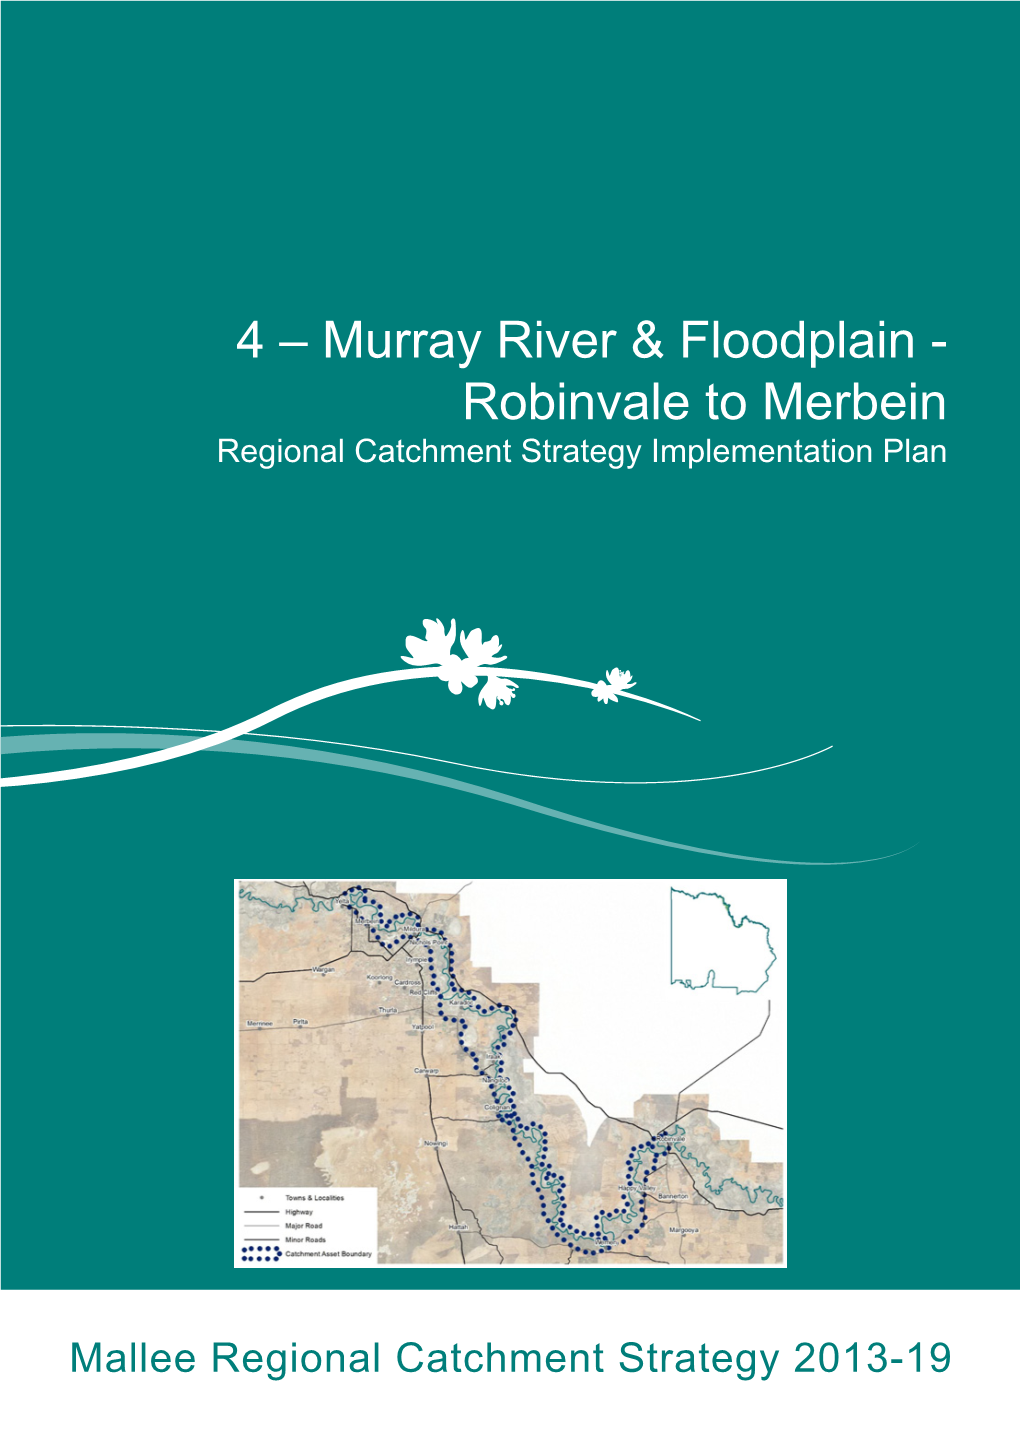 4 – Murray River & Floodplain